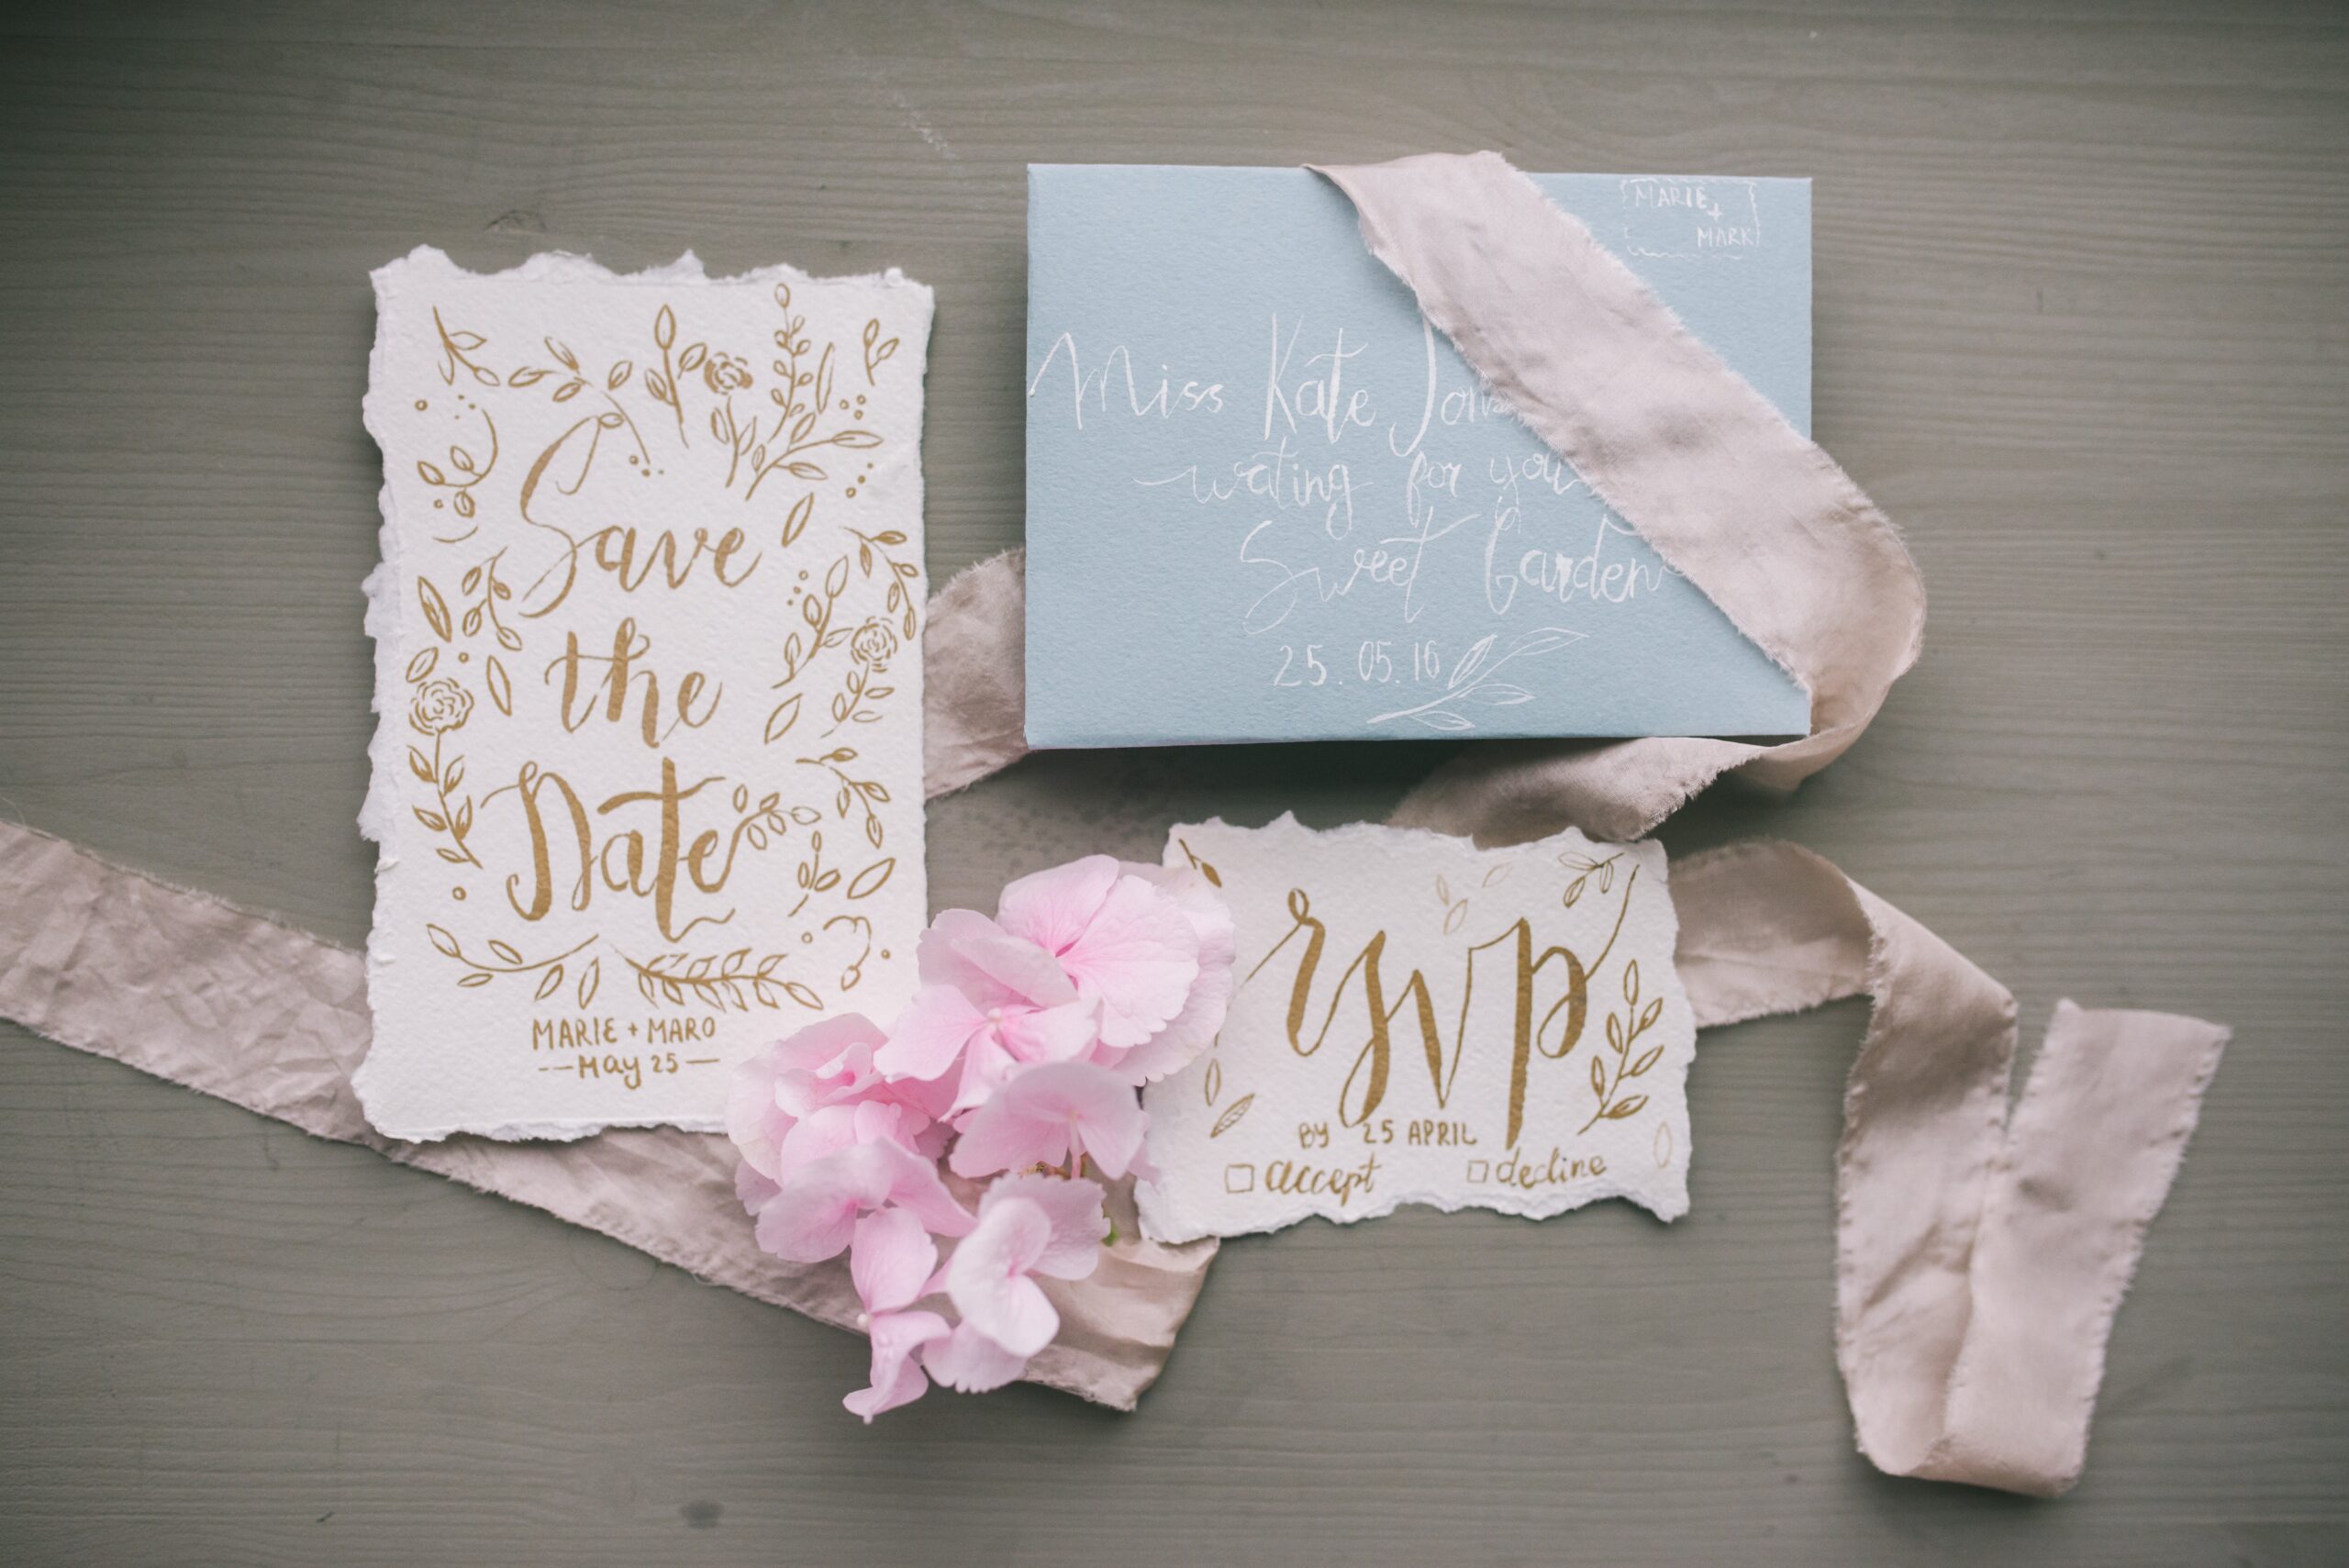 Dutch wedding planner invitations